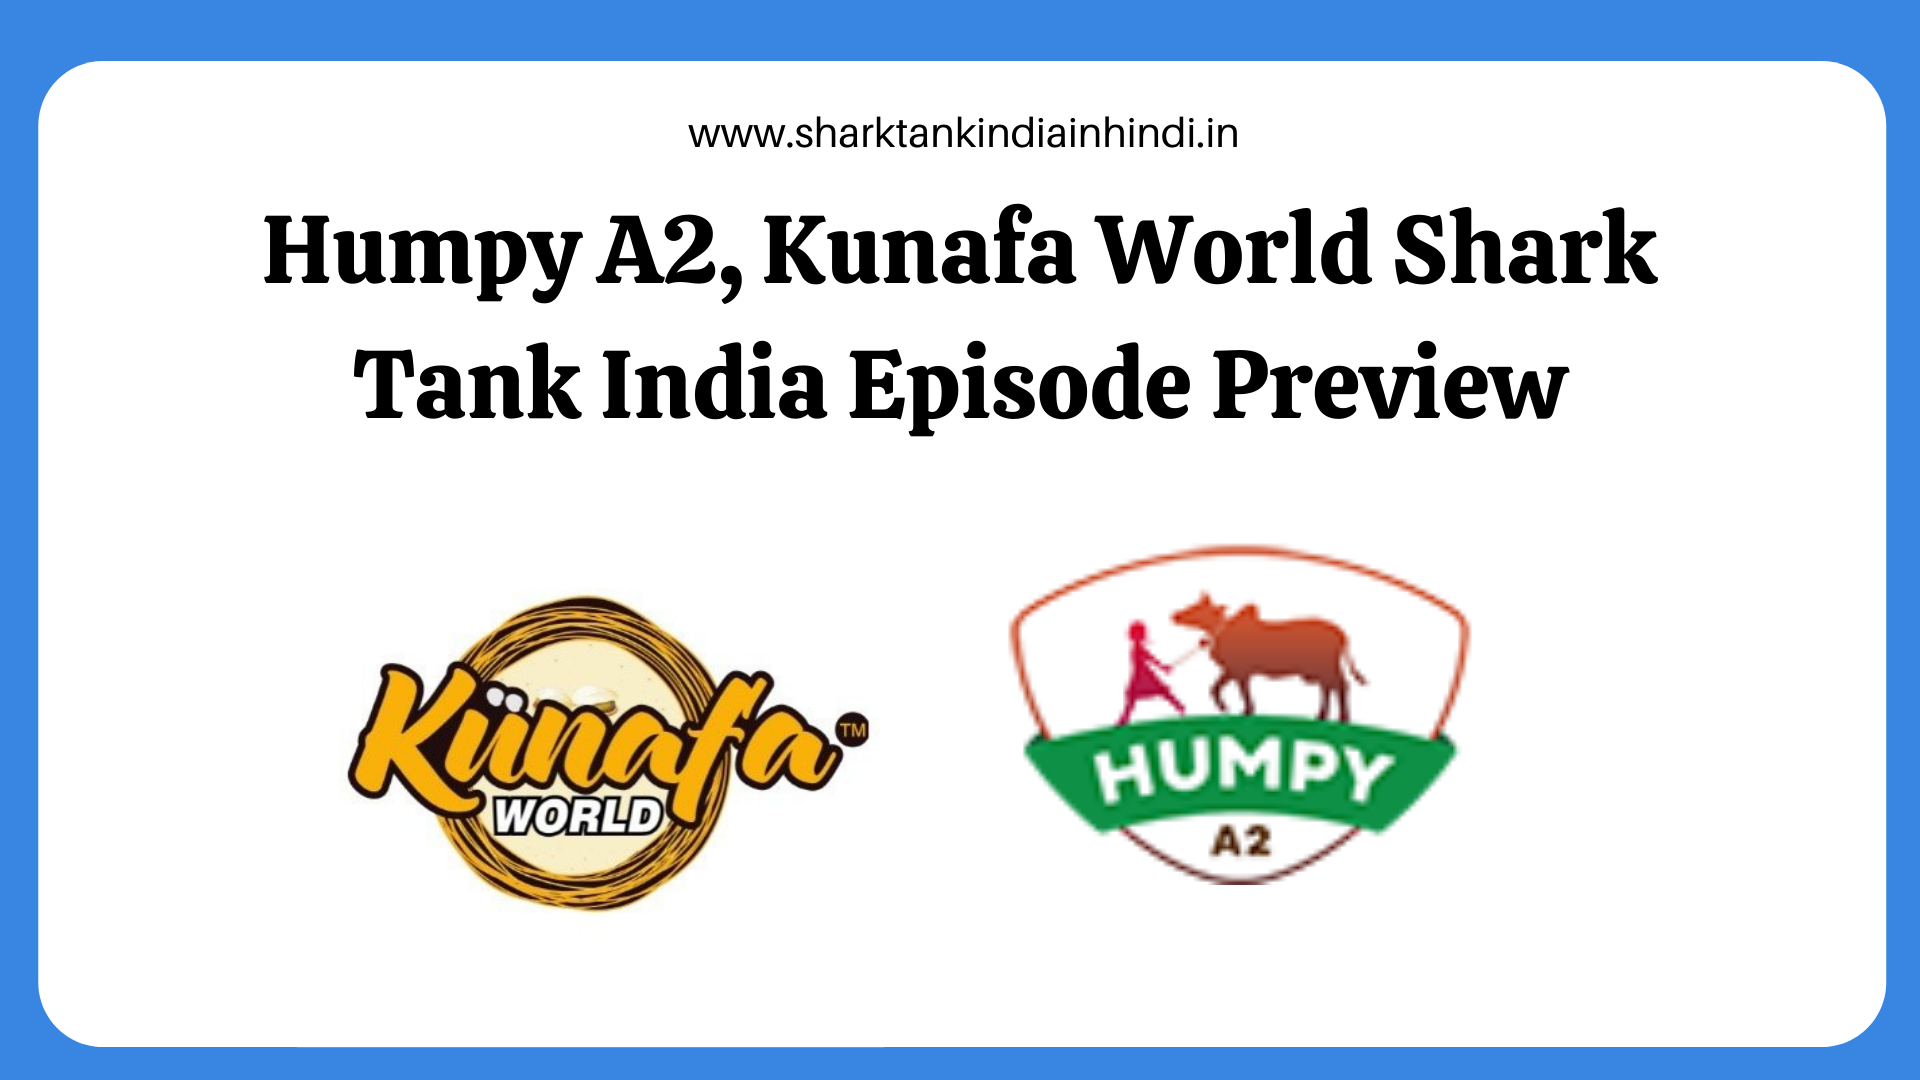 Humpy A2, Kunafa World Shark Tank India Episode Preview